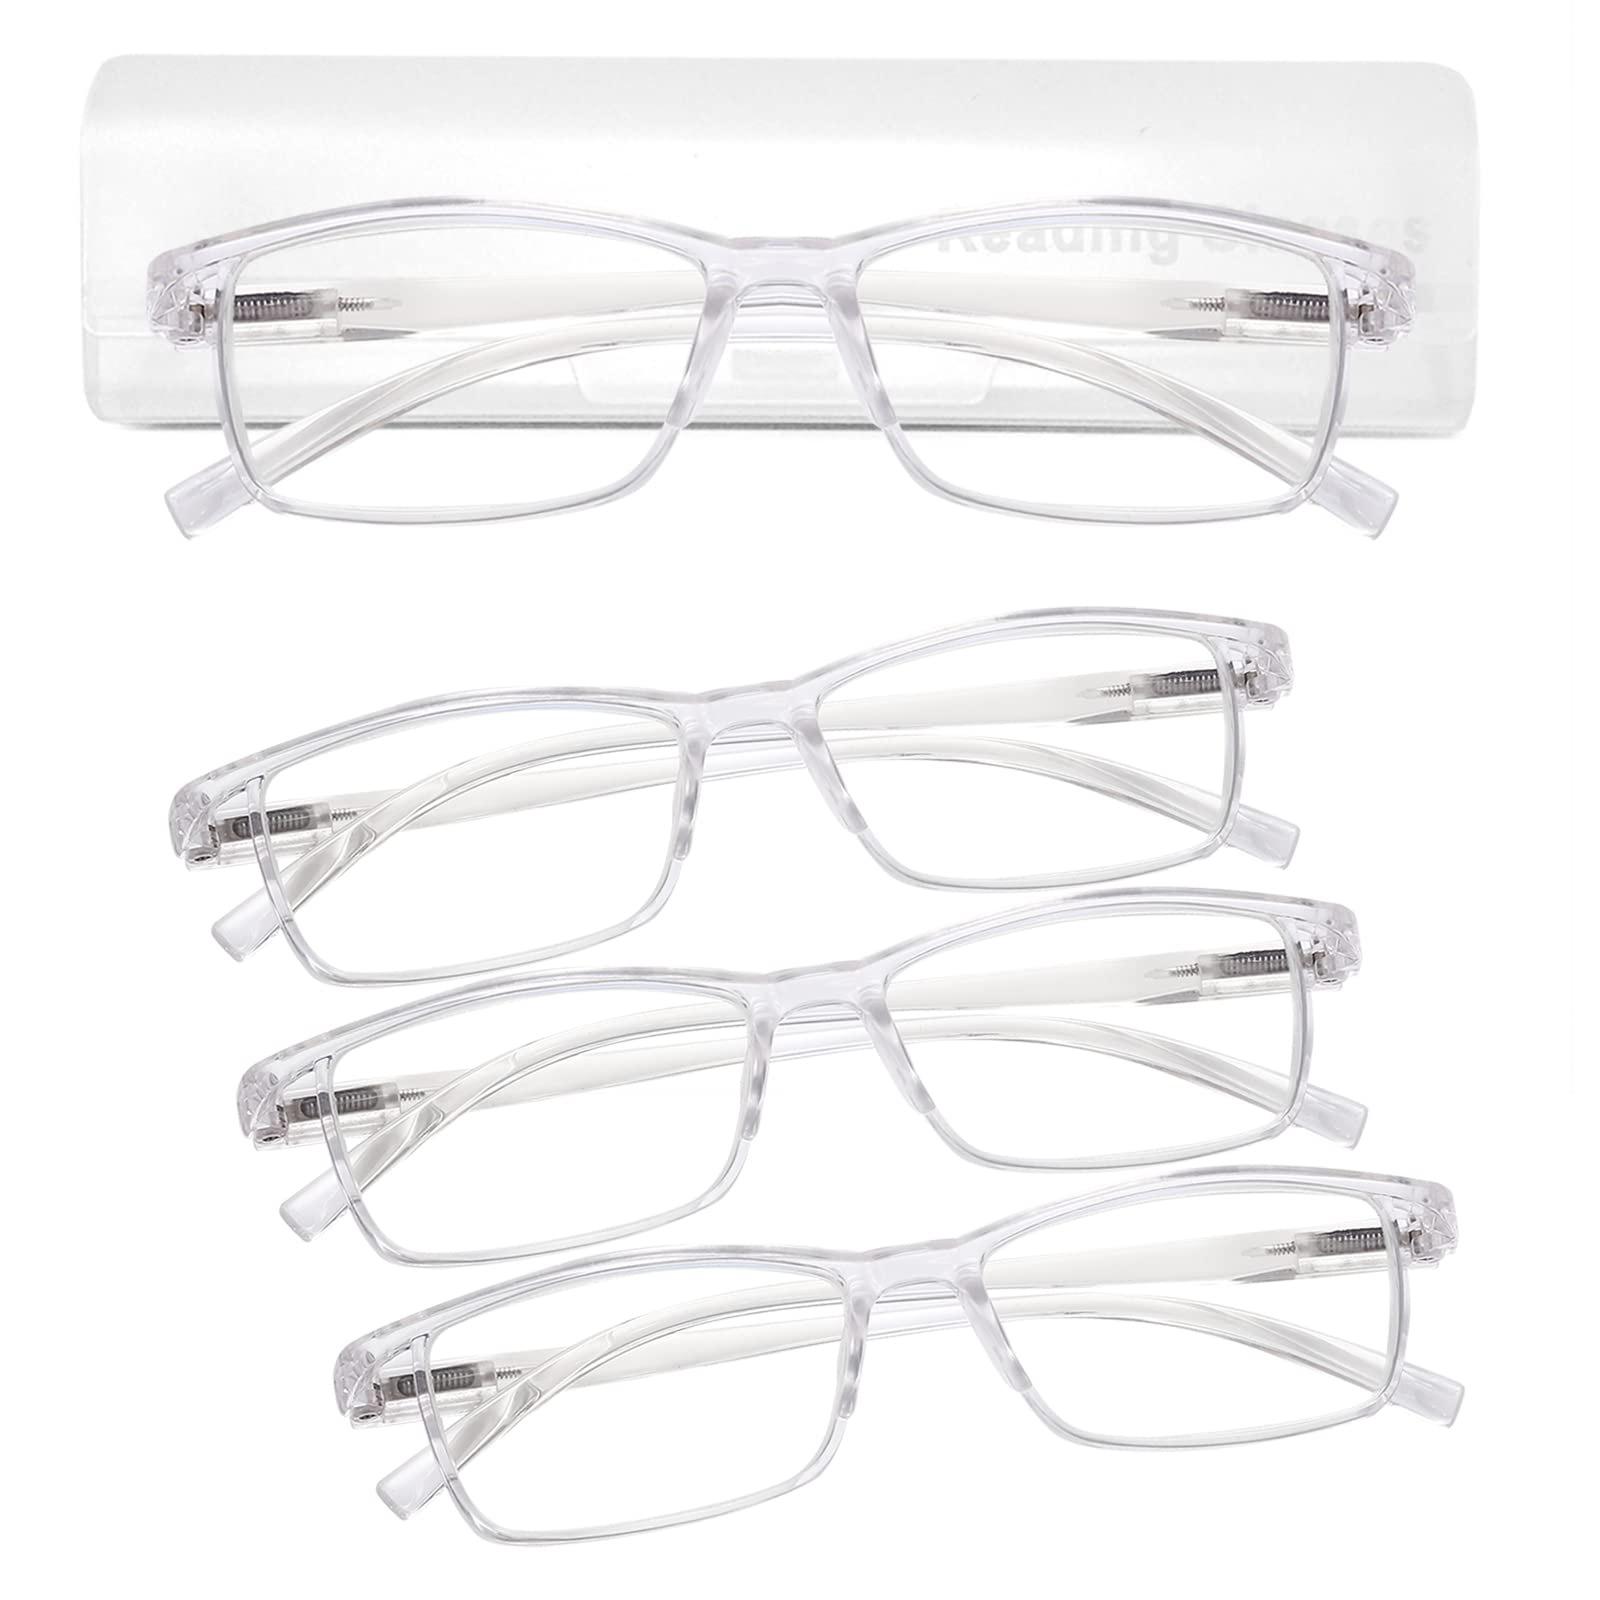 LUFF 4Pcs Anti-Blue-ray Reading Glasses Portable Ultra-Light Readers